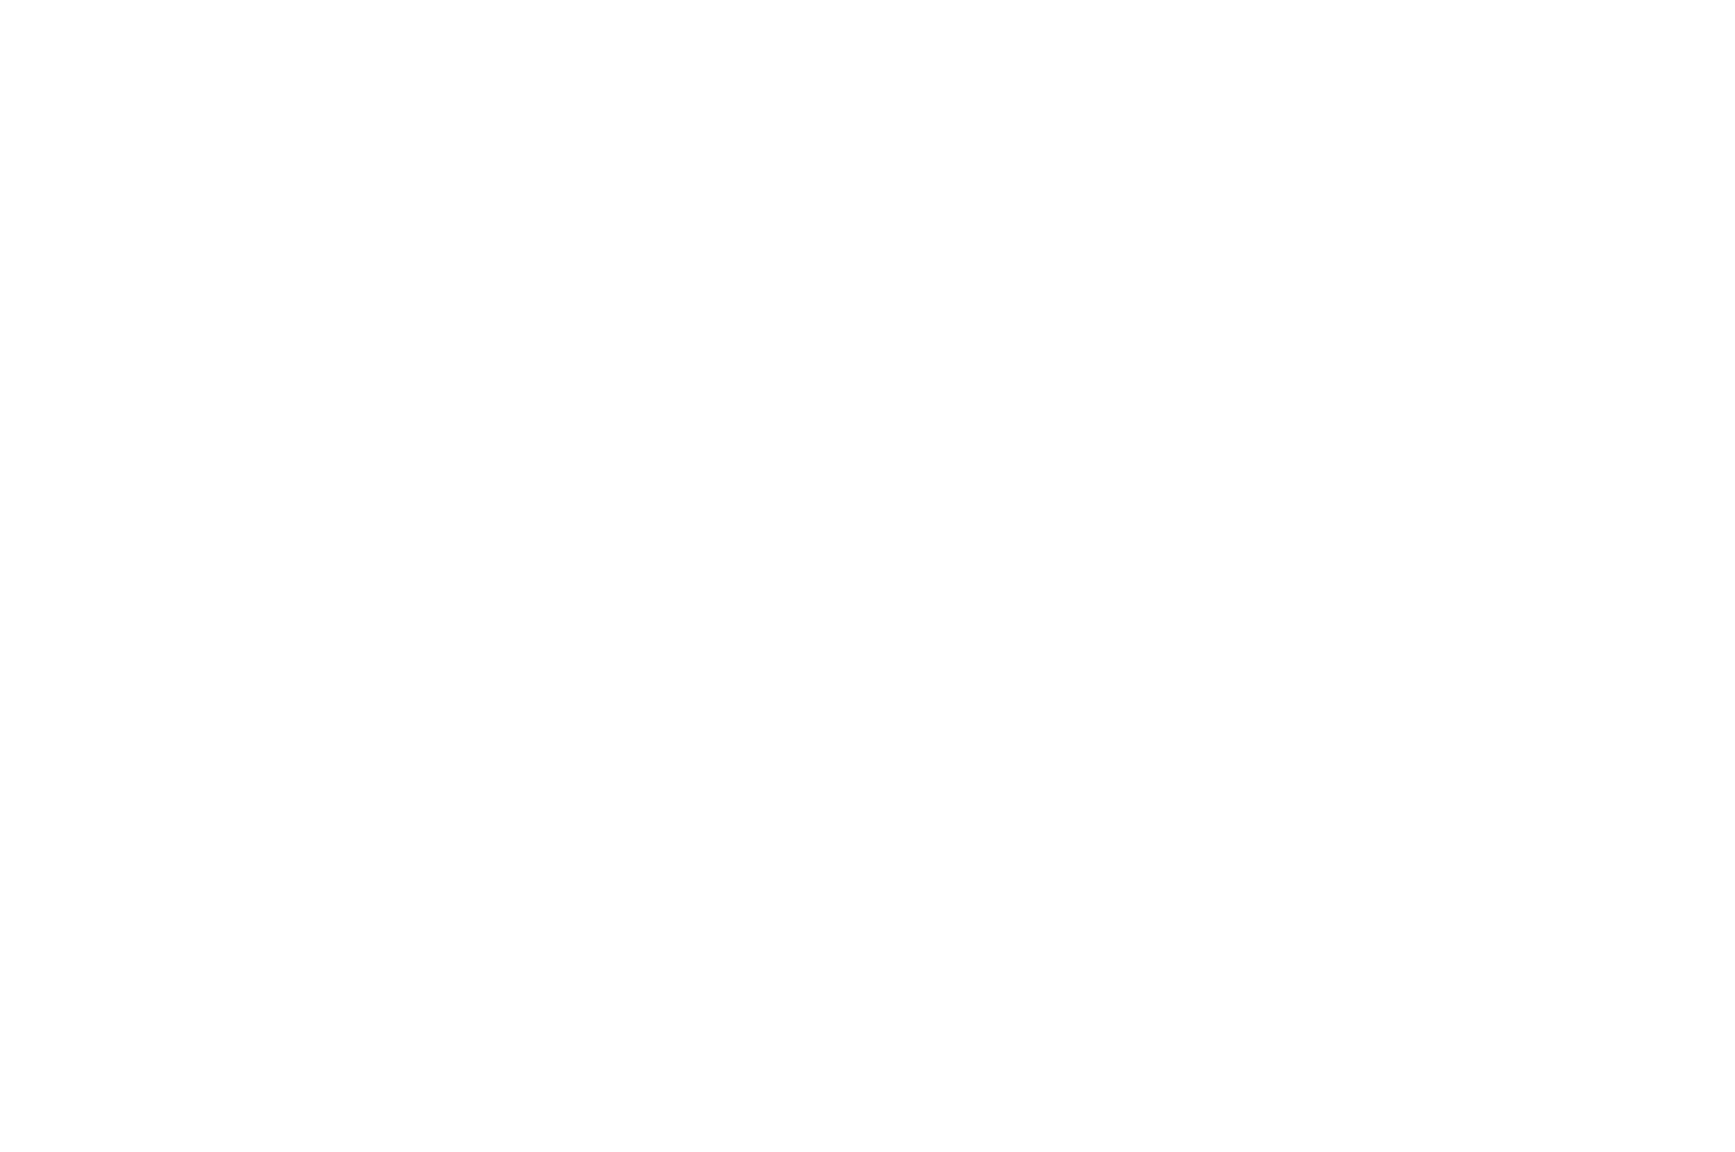 BEST FEATURE - Anatolia International Film Festival - ISTANBUL 2022(1)